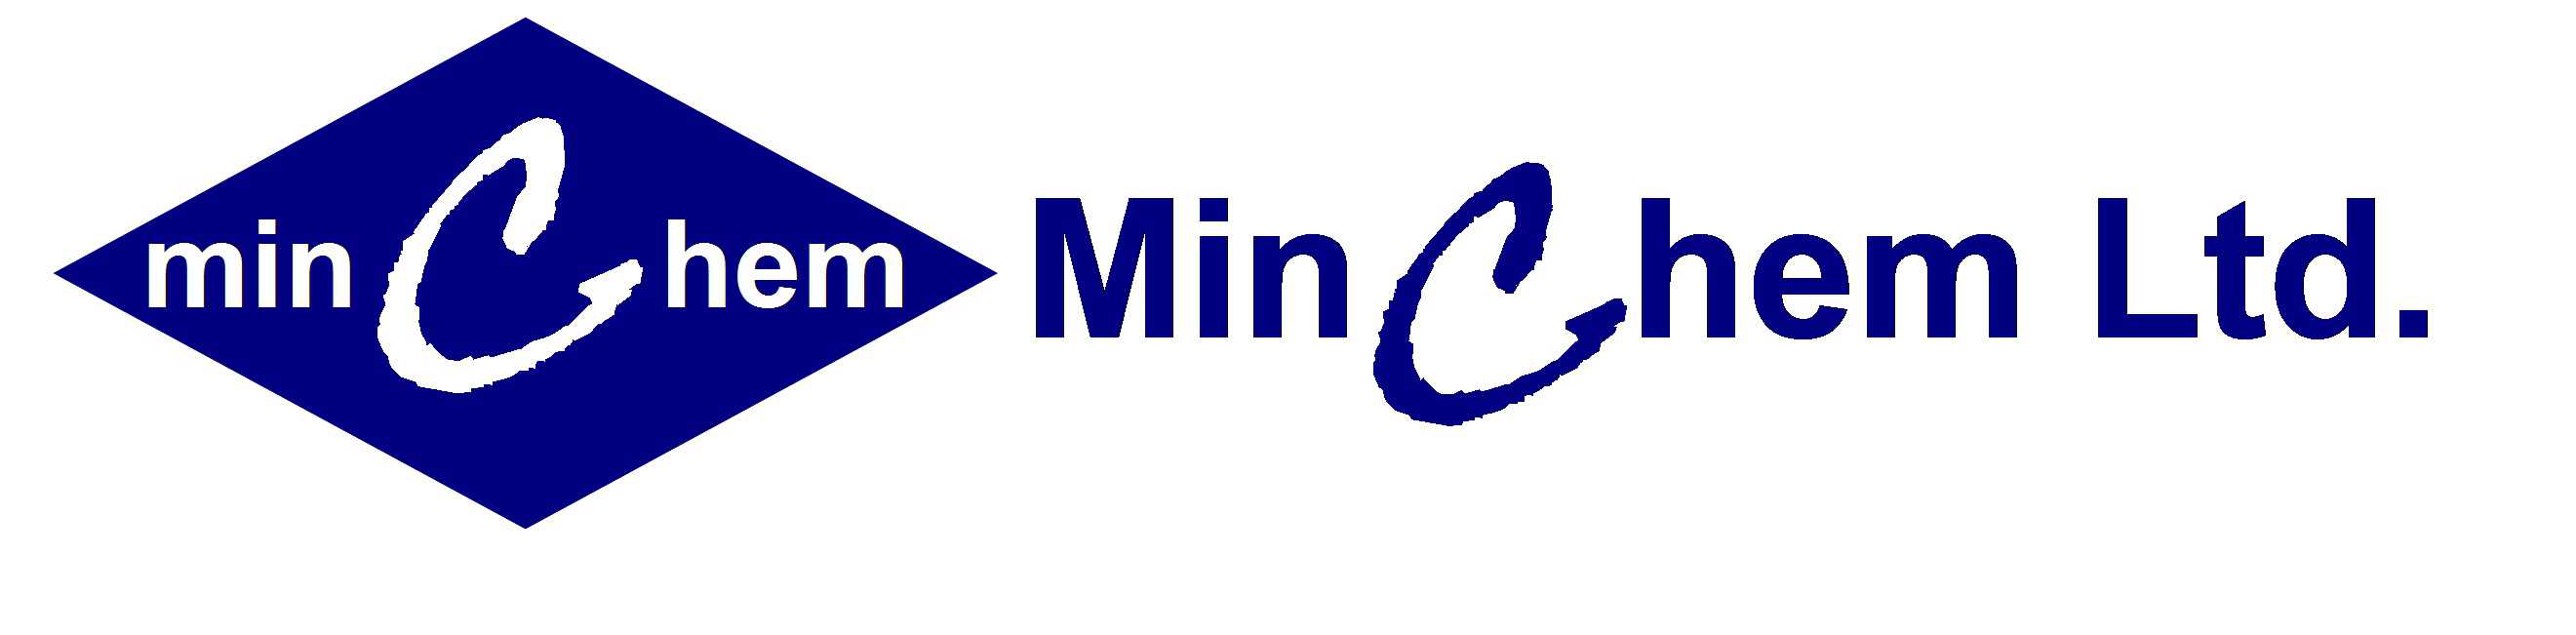 MinChem Ltd Logo